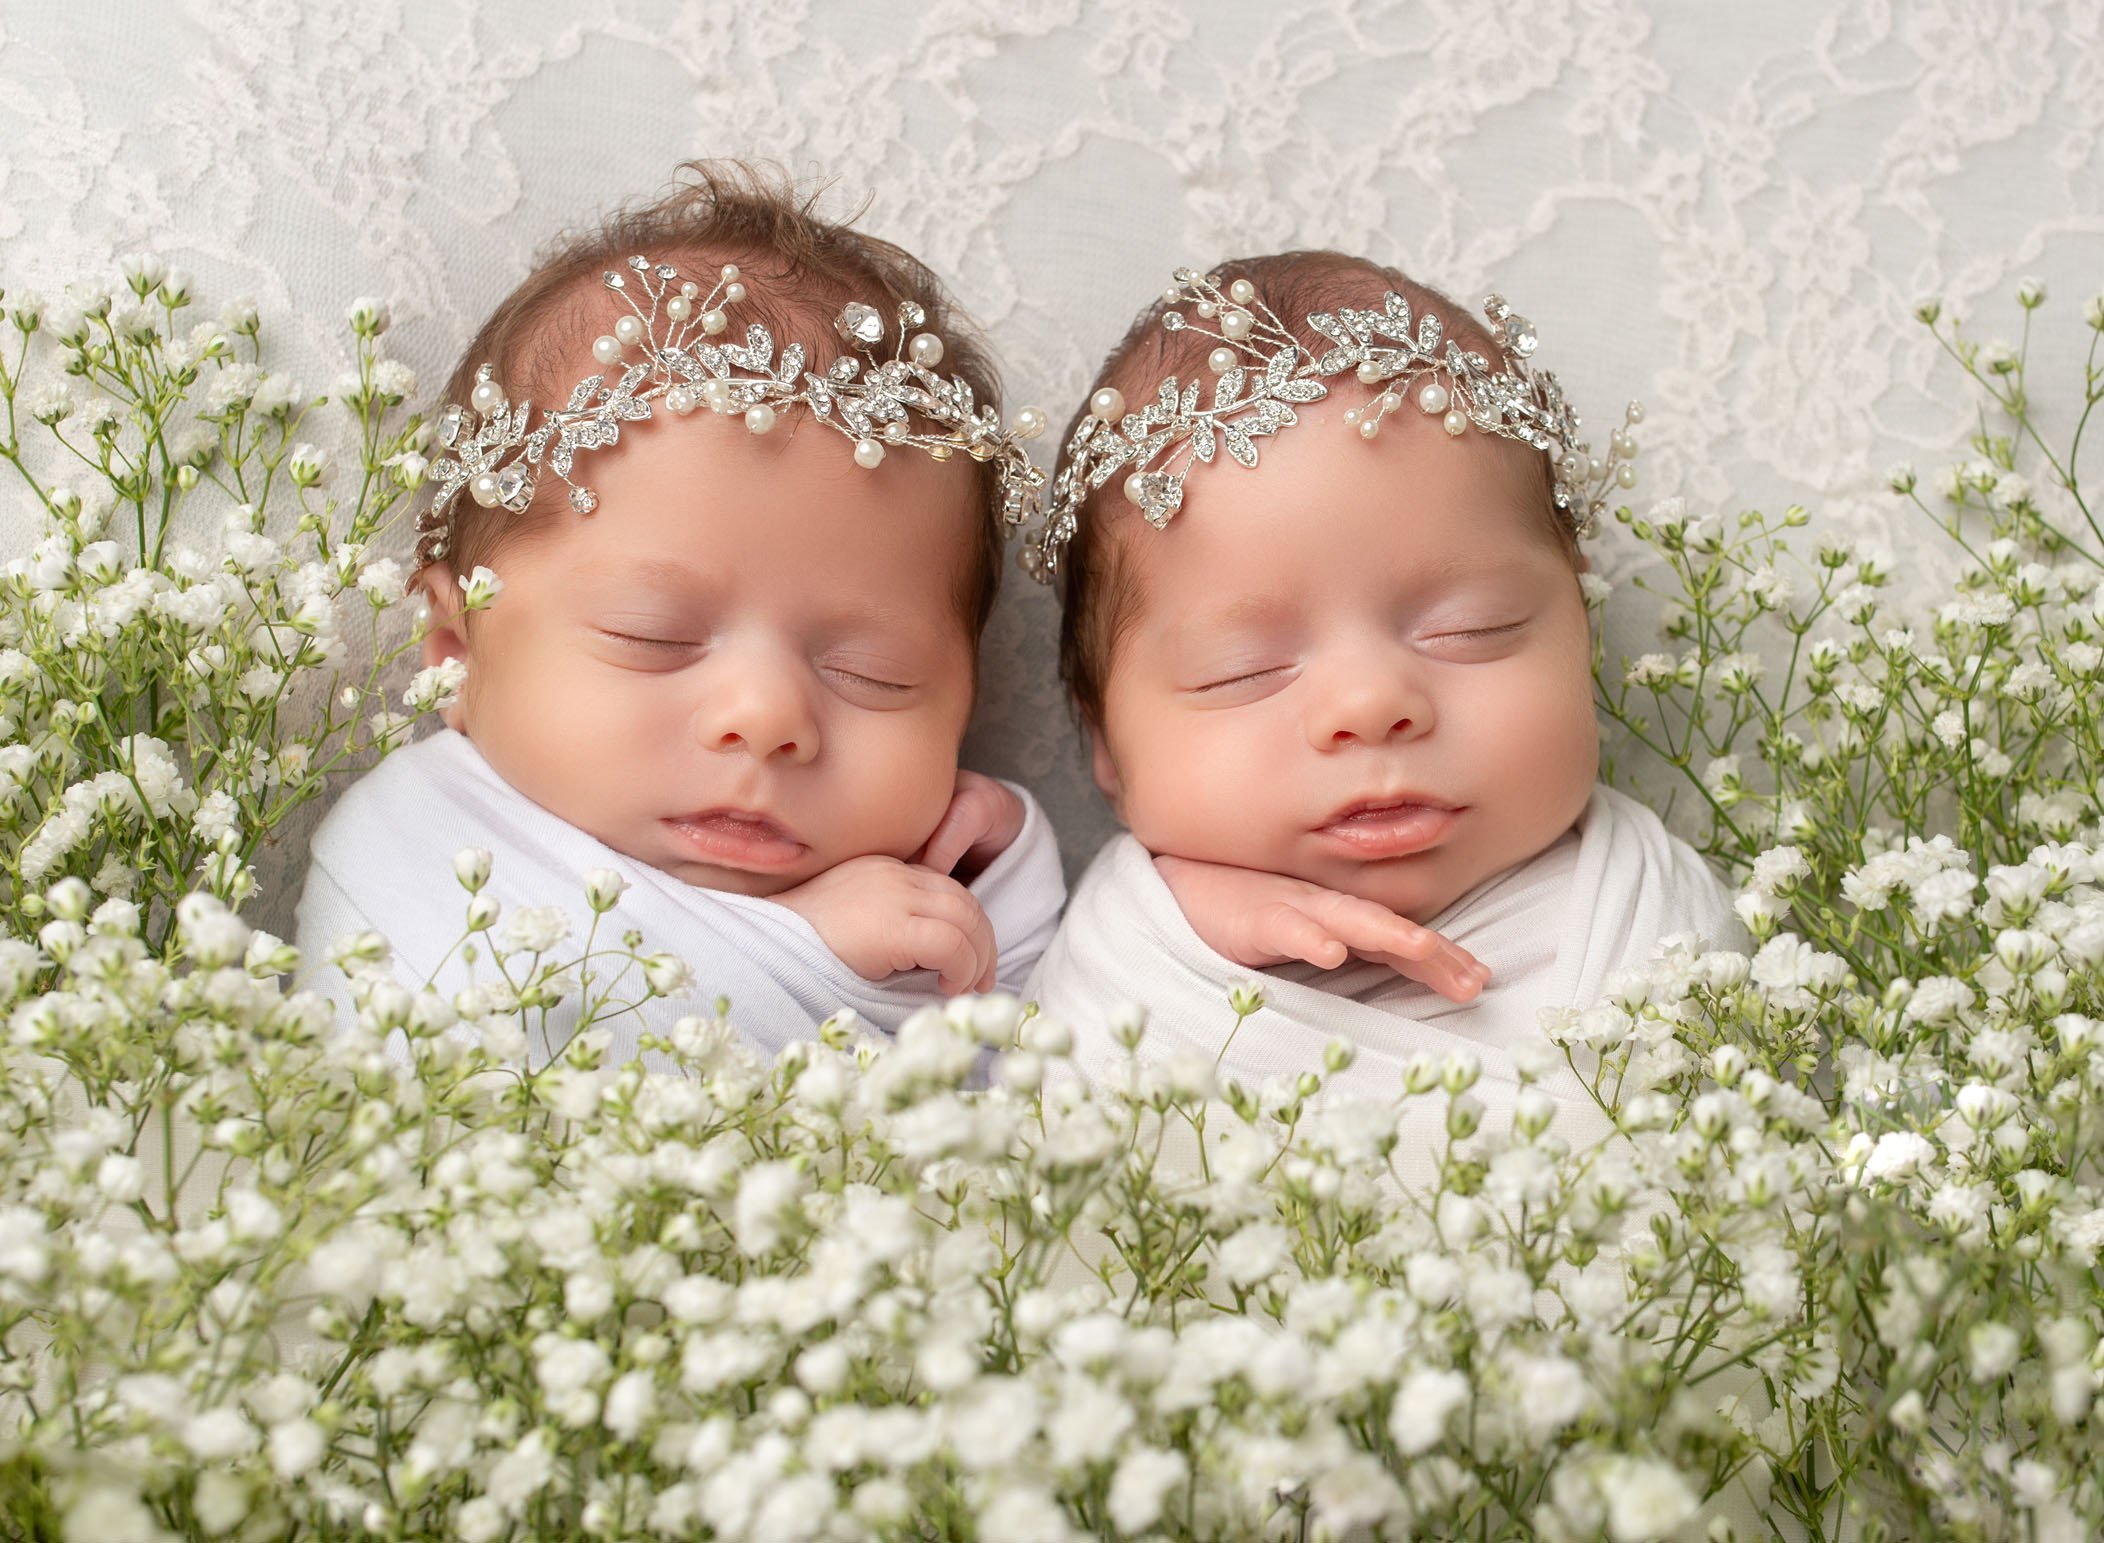 Elizabeth And Lilly ~ Identical Twin Girls Newborn Session One Big Happy Photo